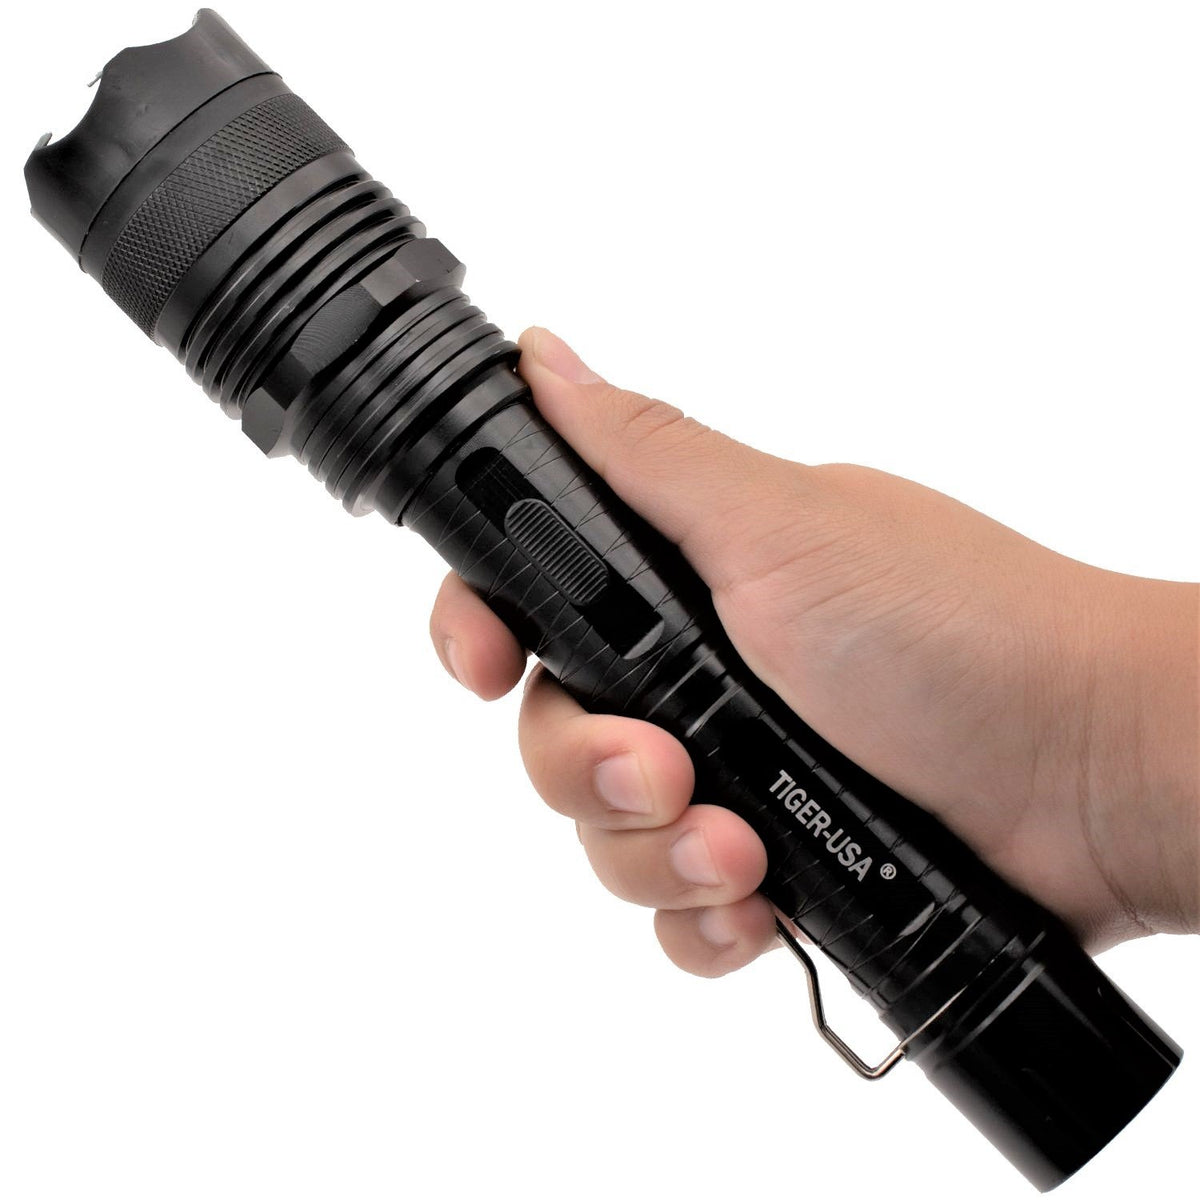 Tiger-USA Xtreme® Stun Gun - Home 100M Flashlight Superstore Security The Tactical